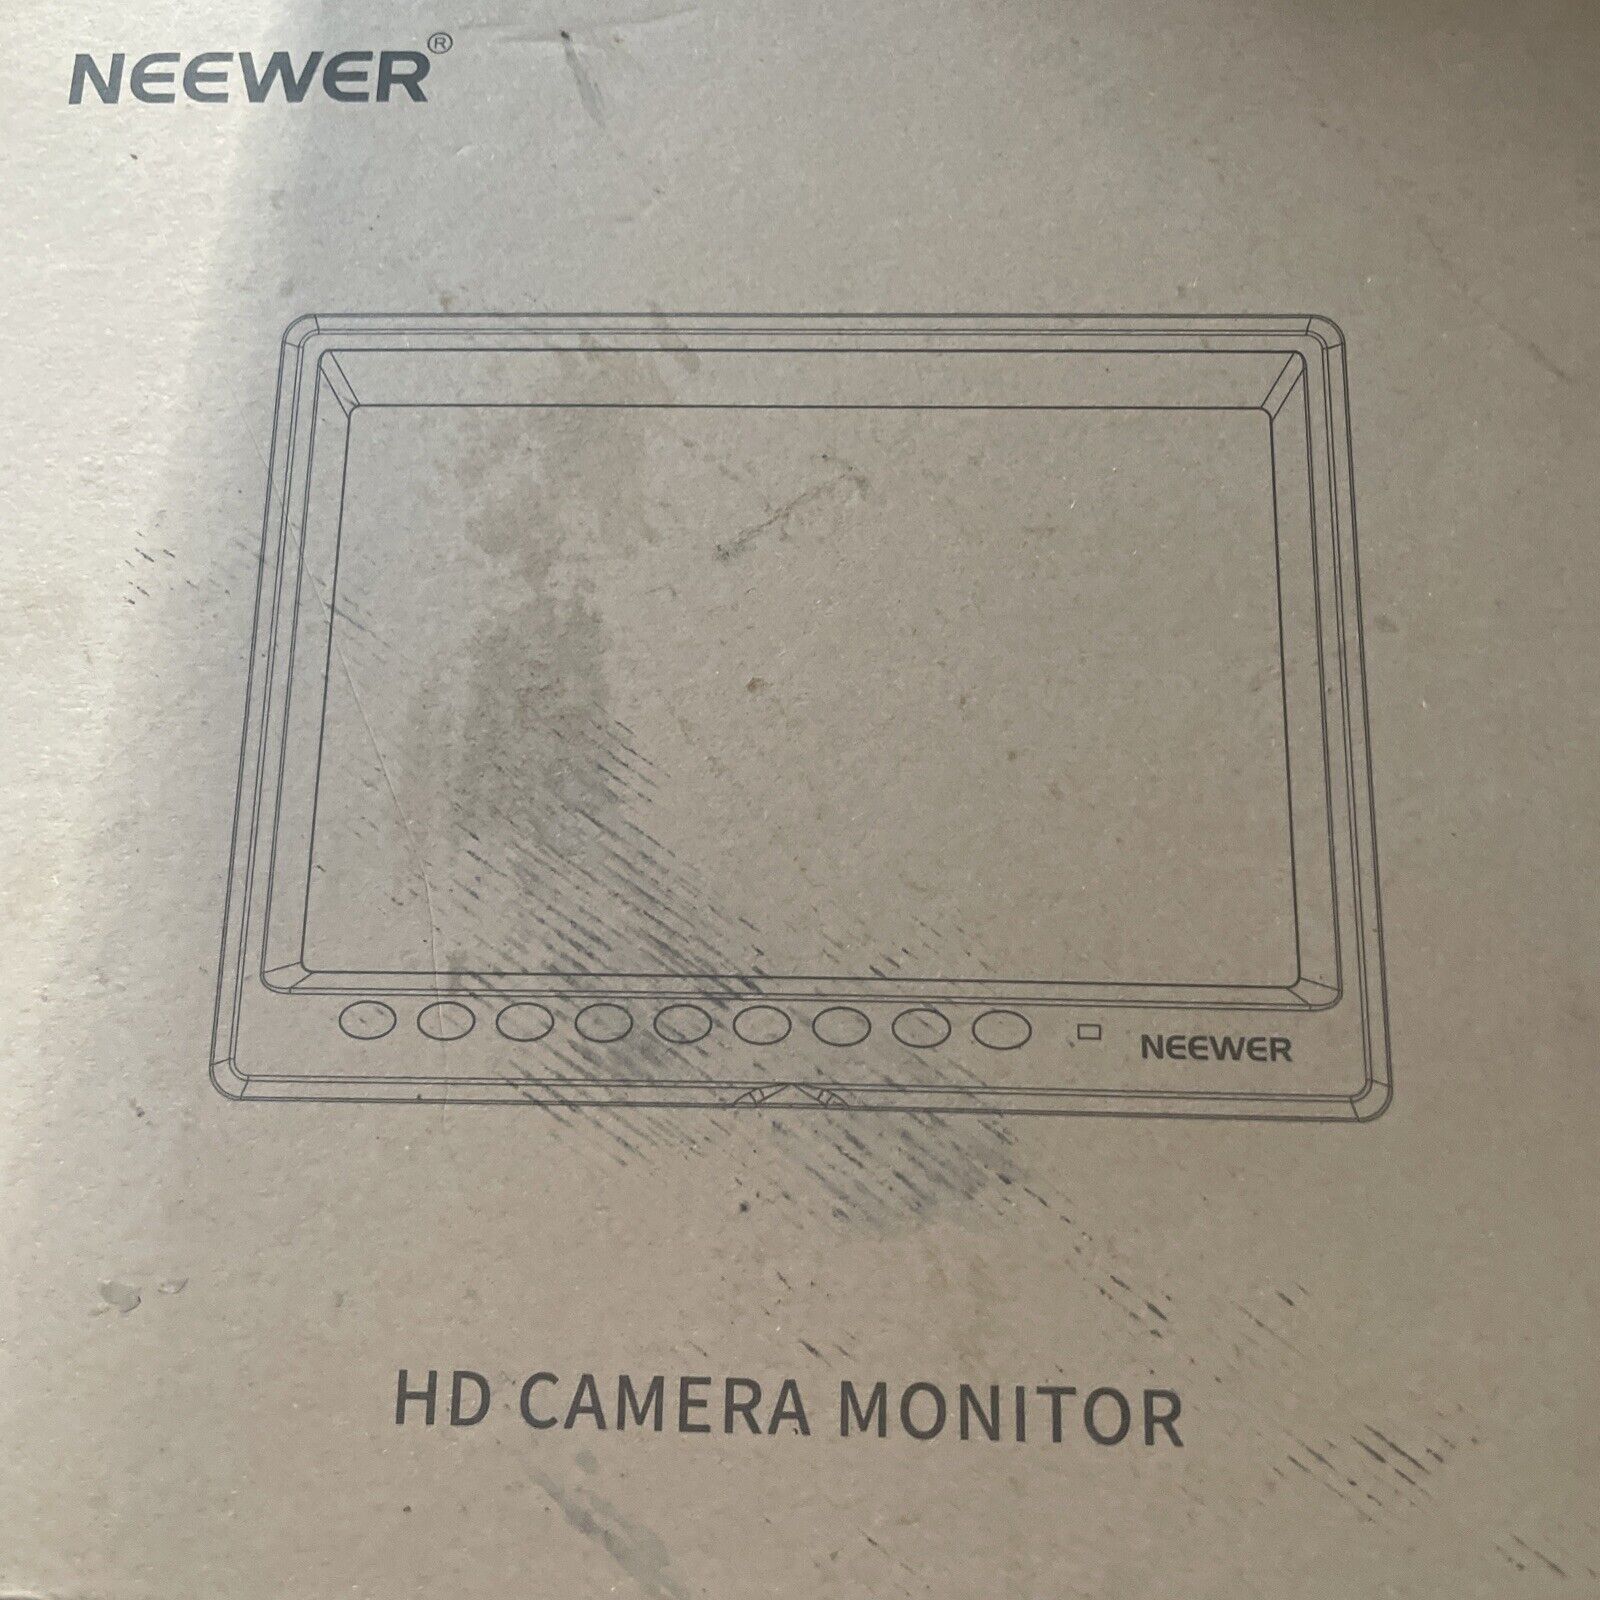 Neewer F100 Camera Field HD Monitor F 100 Neewer Neewer F100